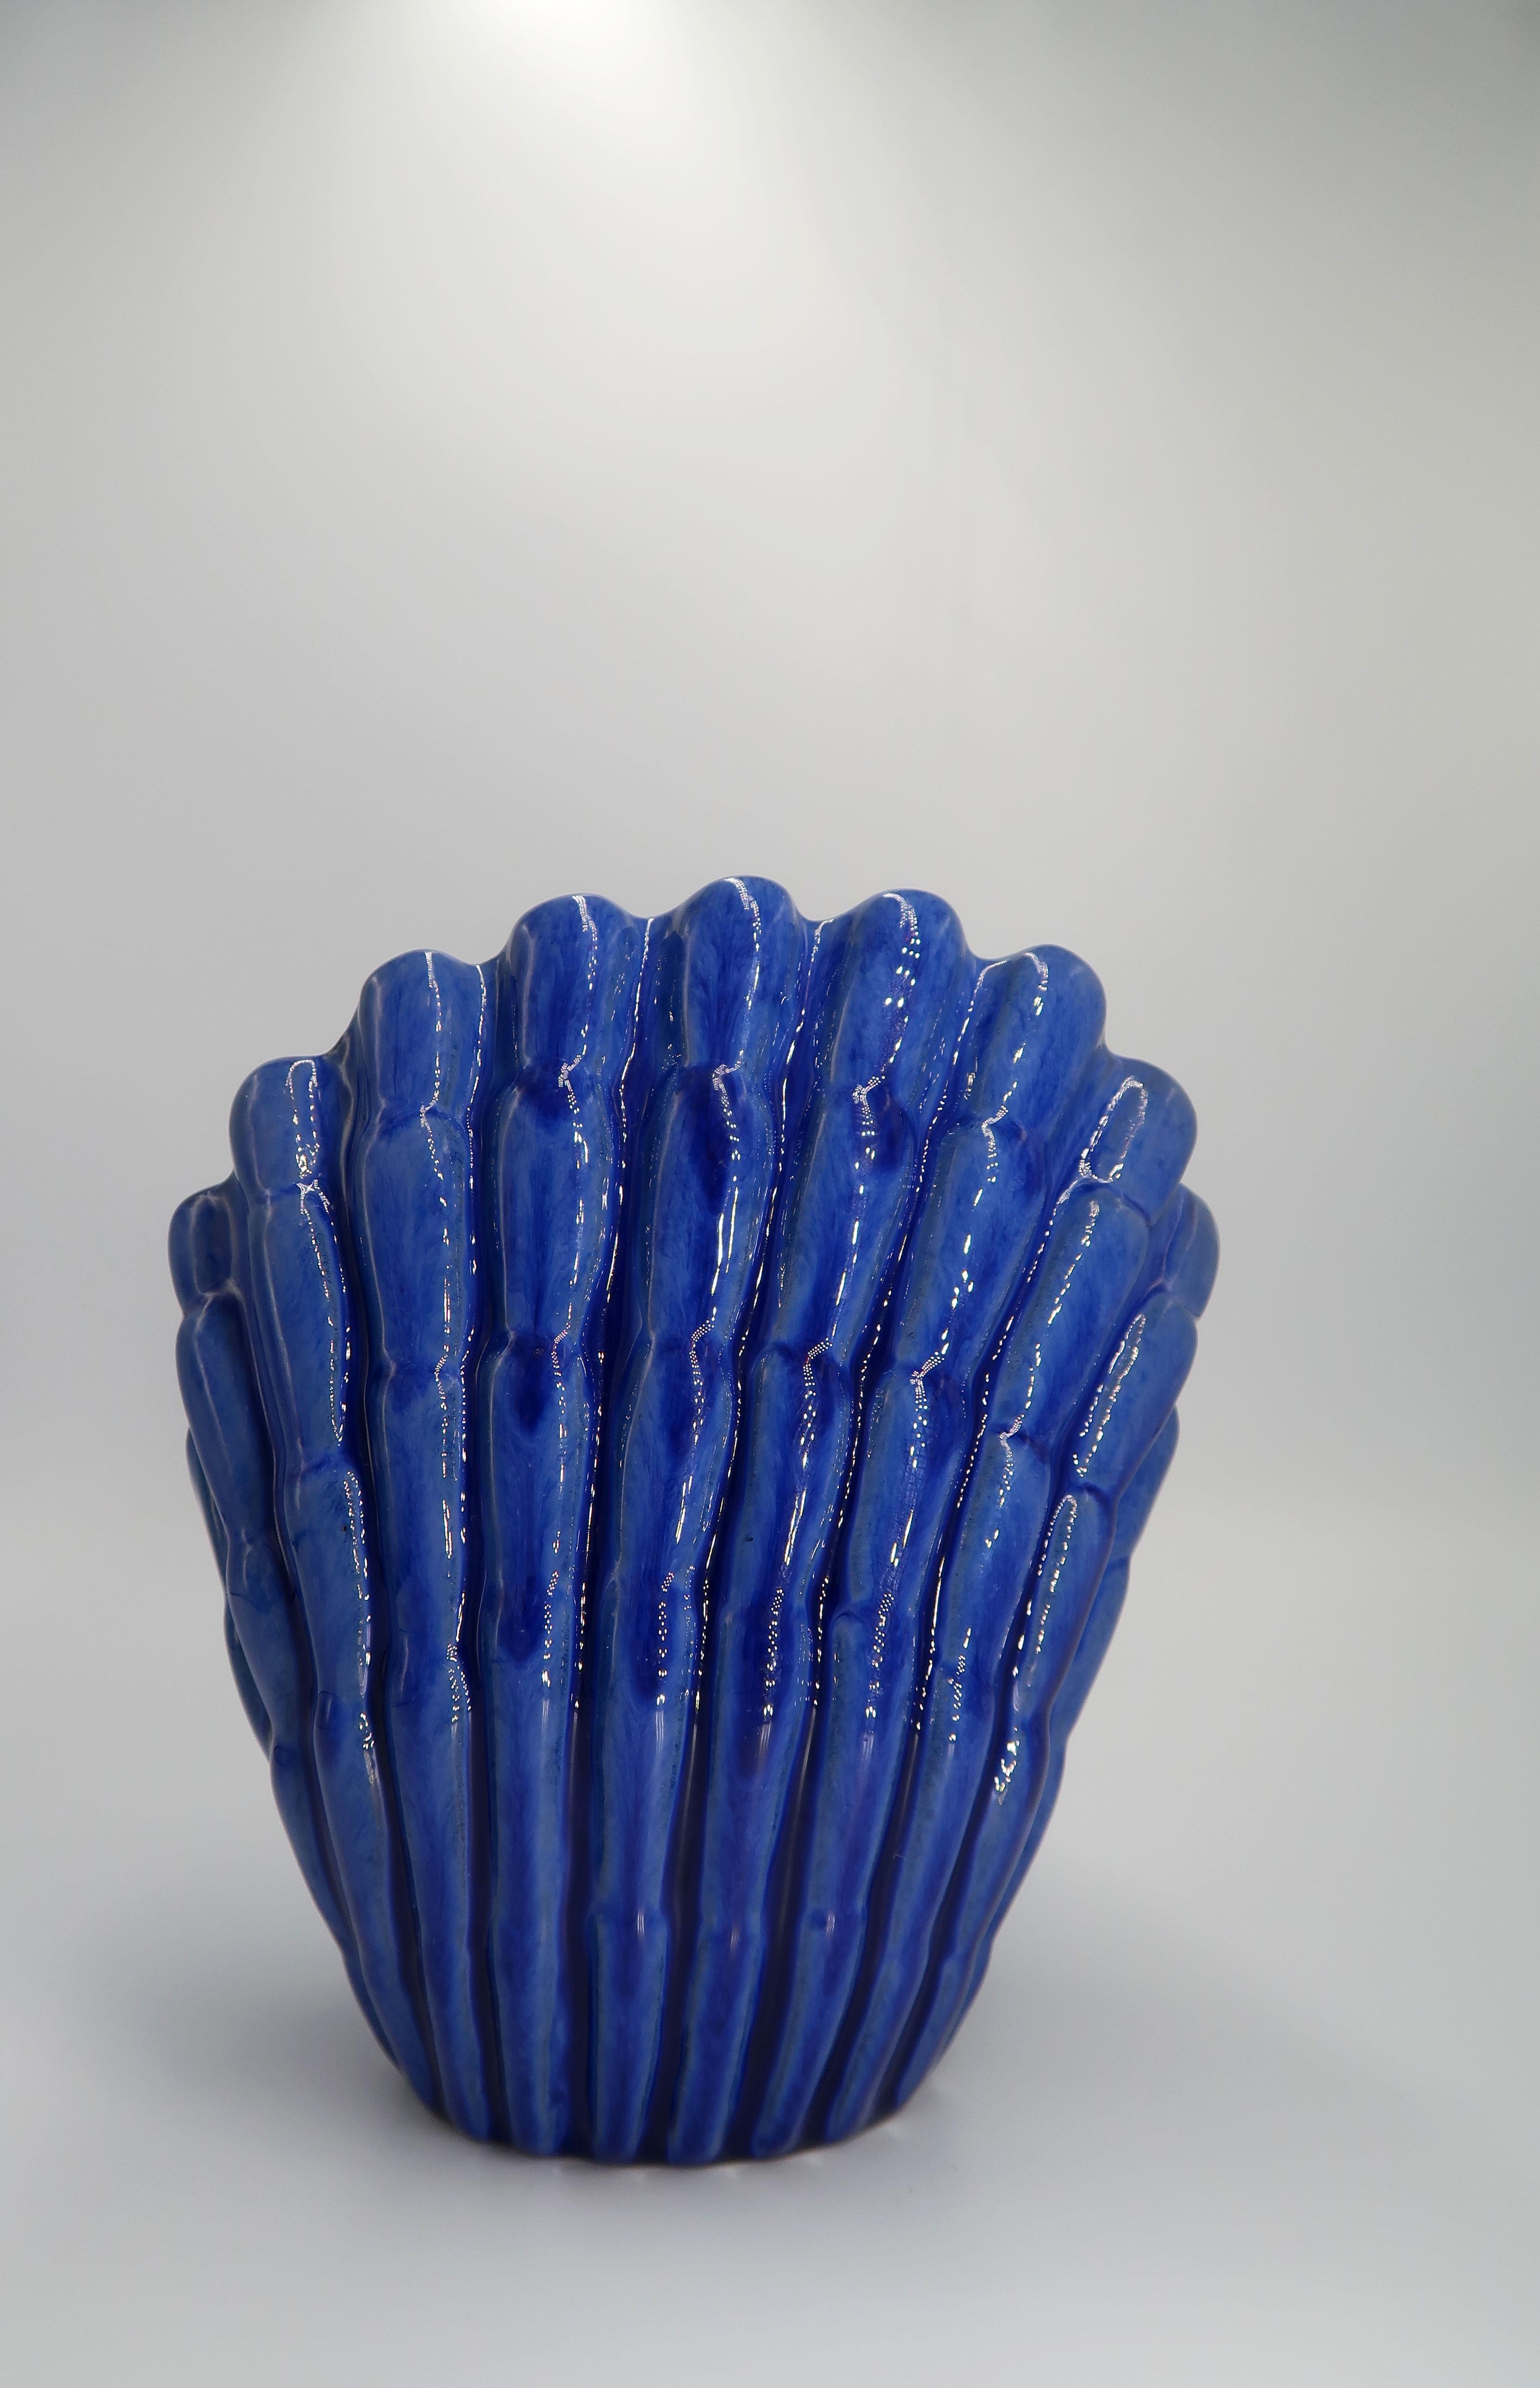 1940s Art Deco Cobalt Blue Shell Shaped Vase, Vicke Lindstrand, Sweden In Good Condition For Sale In Copenhagen, DK